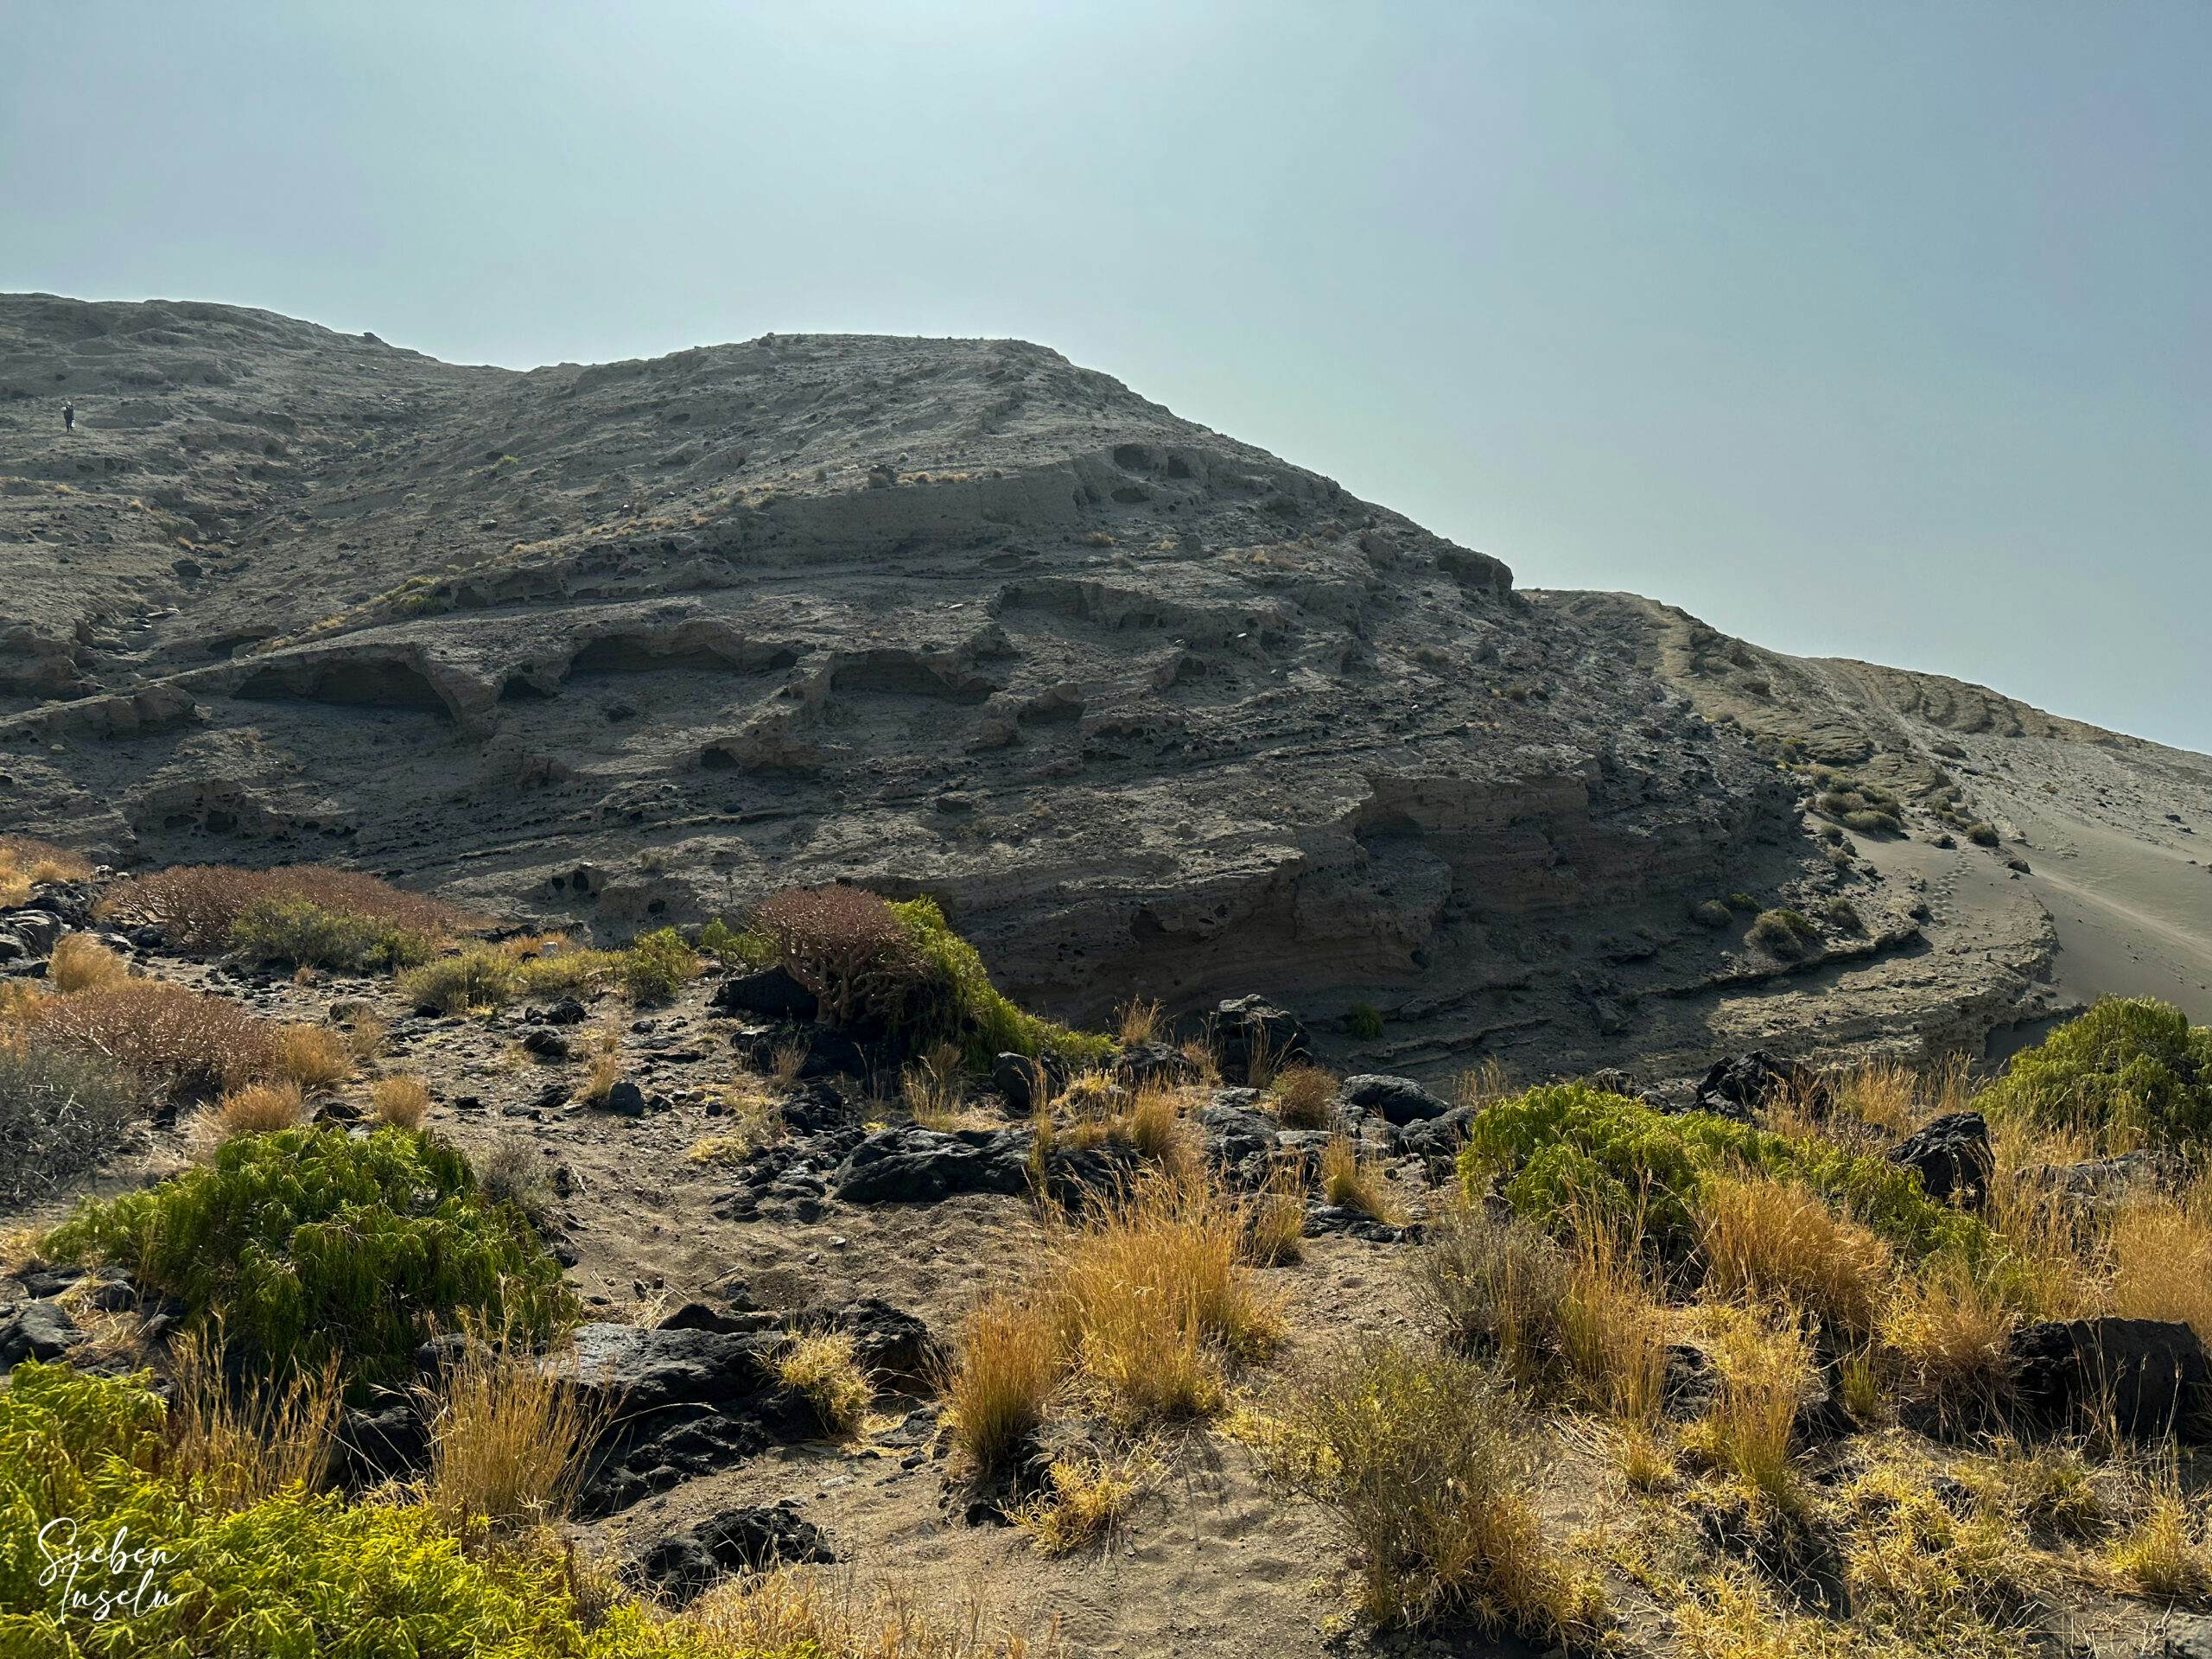 View of the Montaña Pelada ascent path (way back)